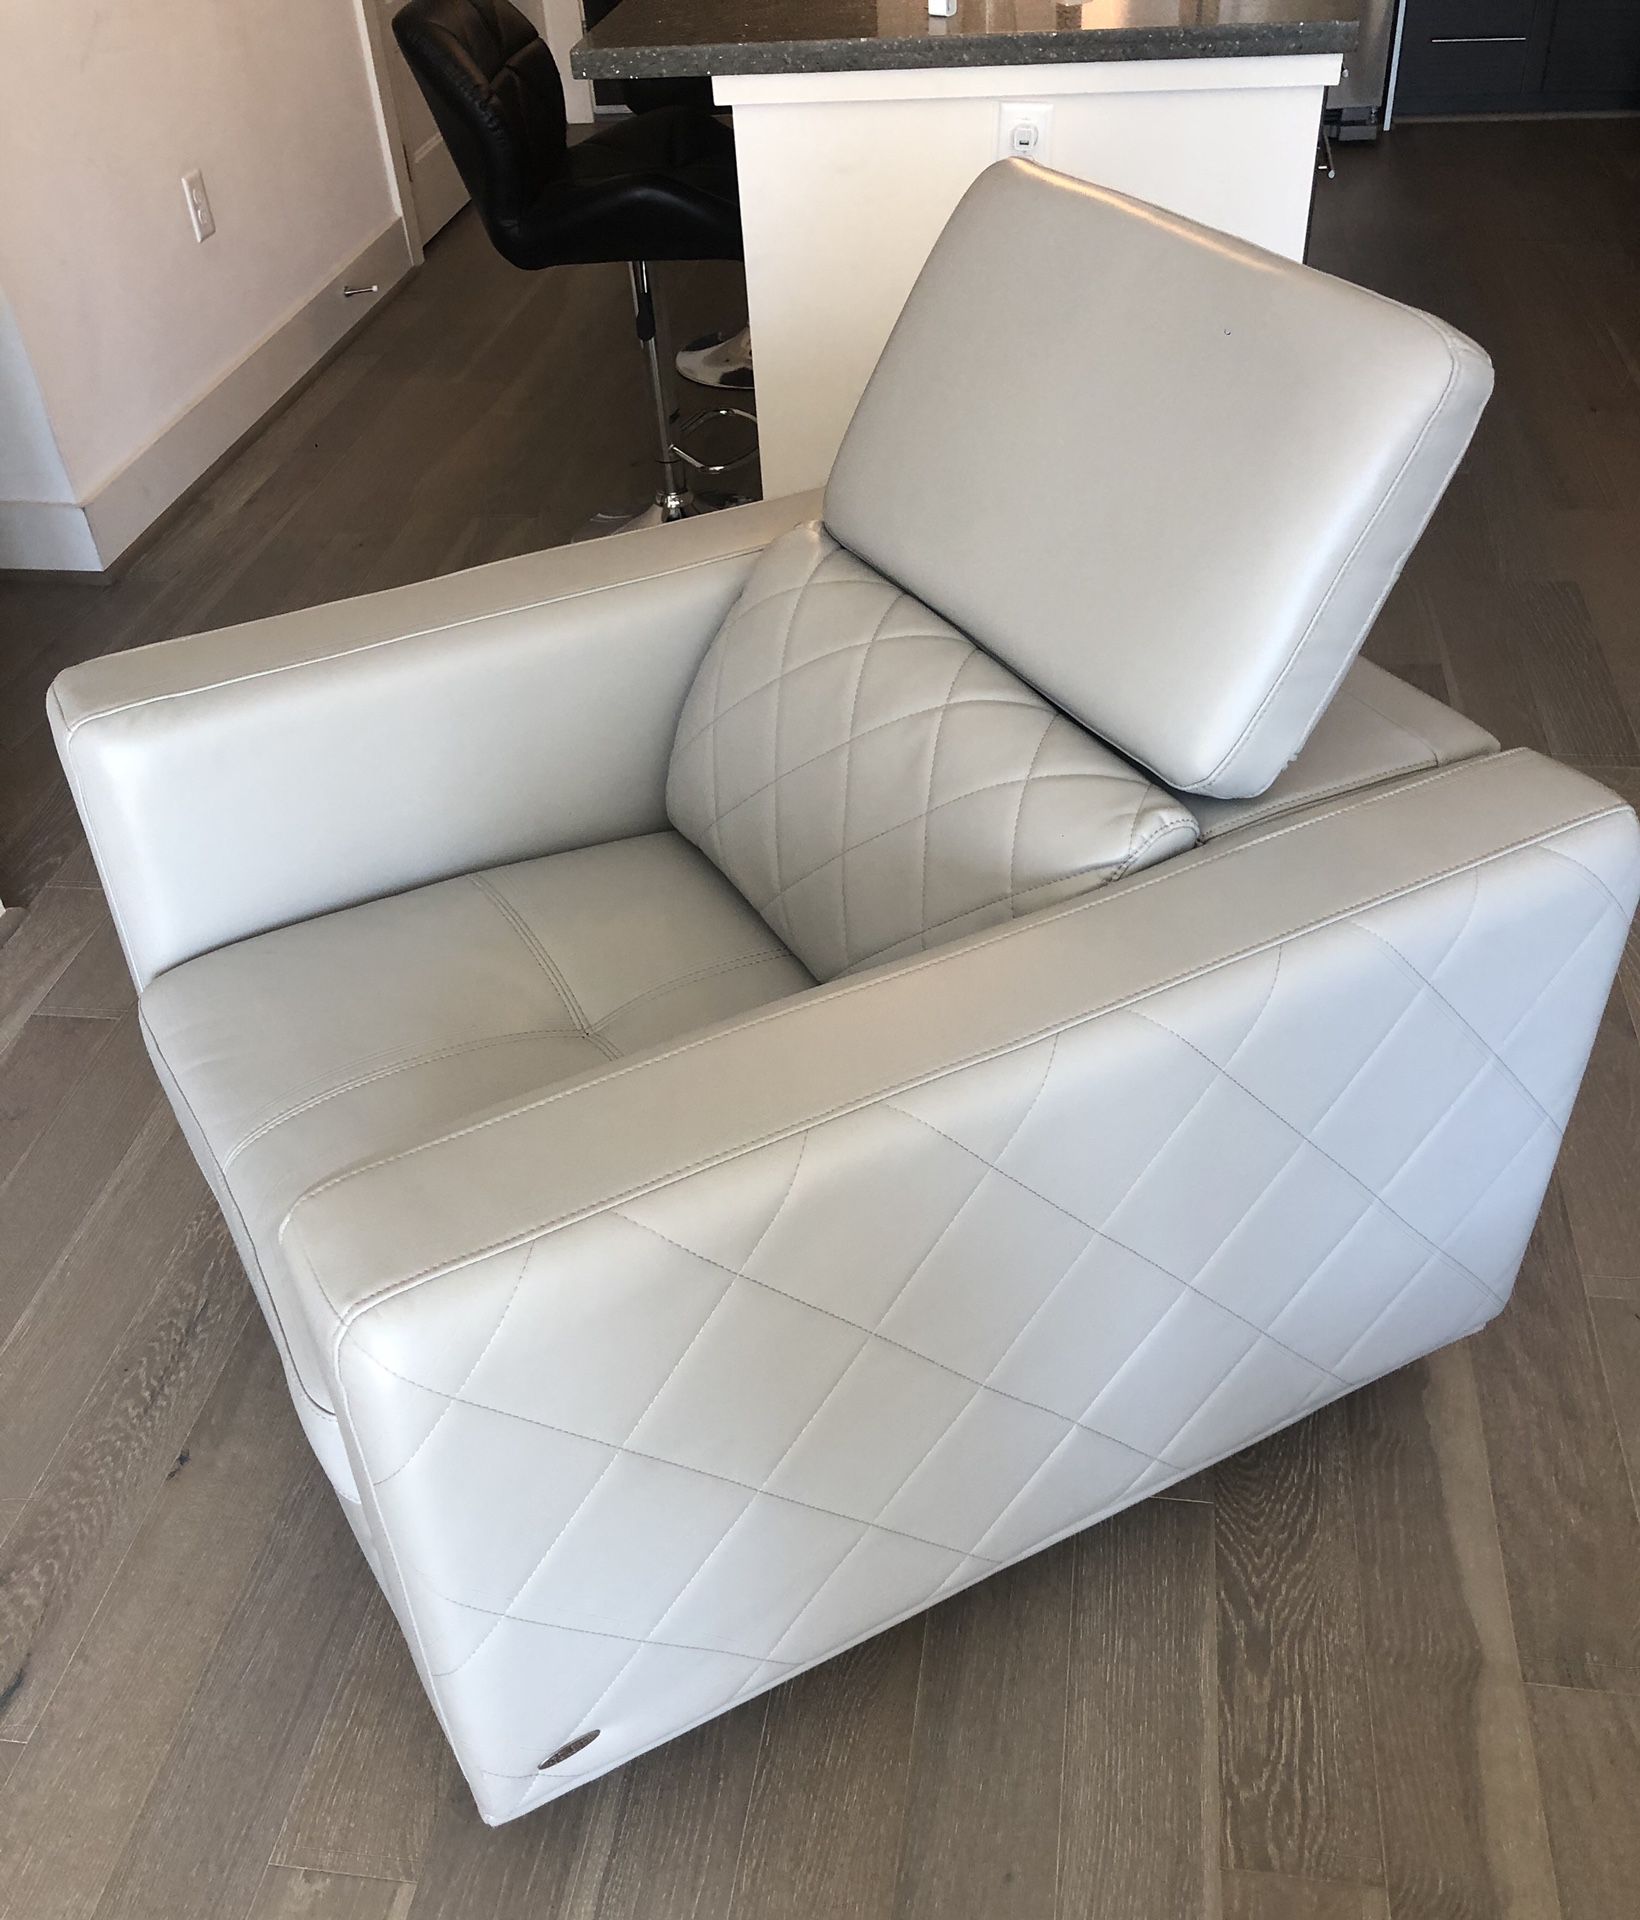 Grey swivel chair